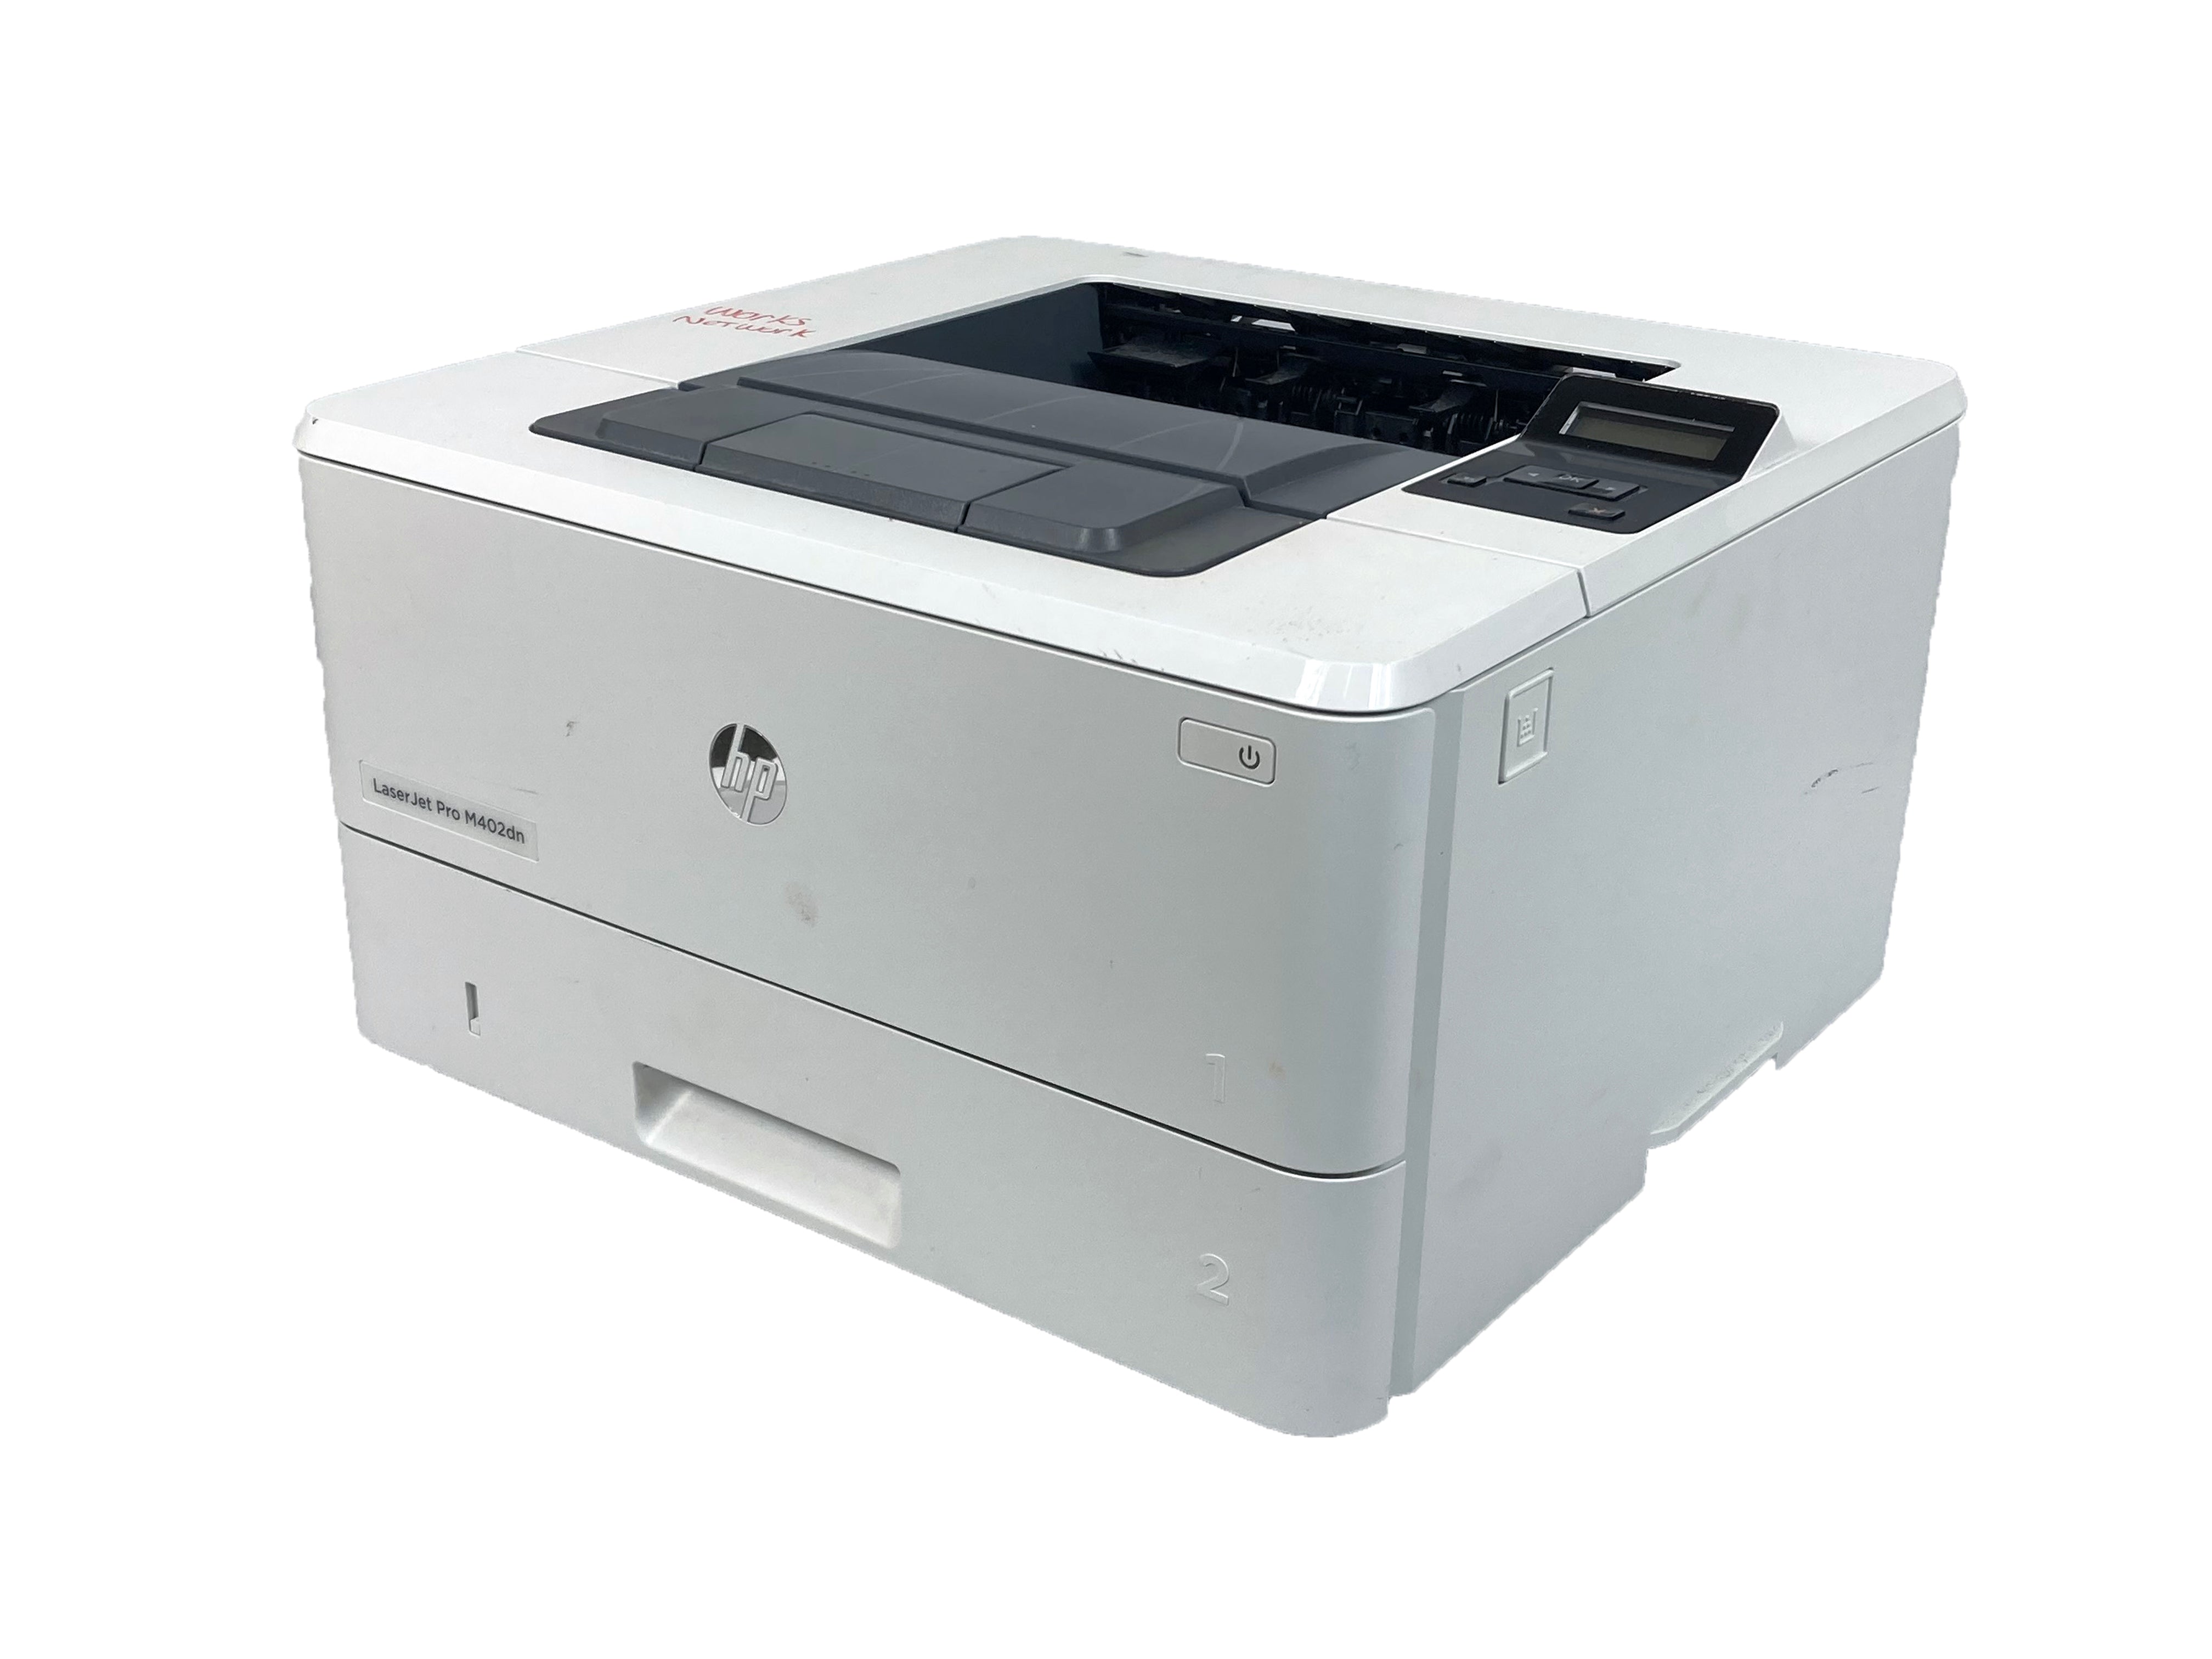 HP LaserJet Pro M402dn Laser Printer